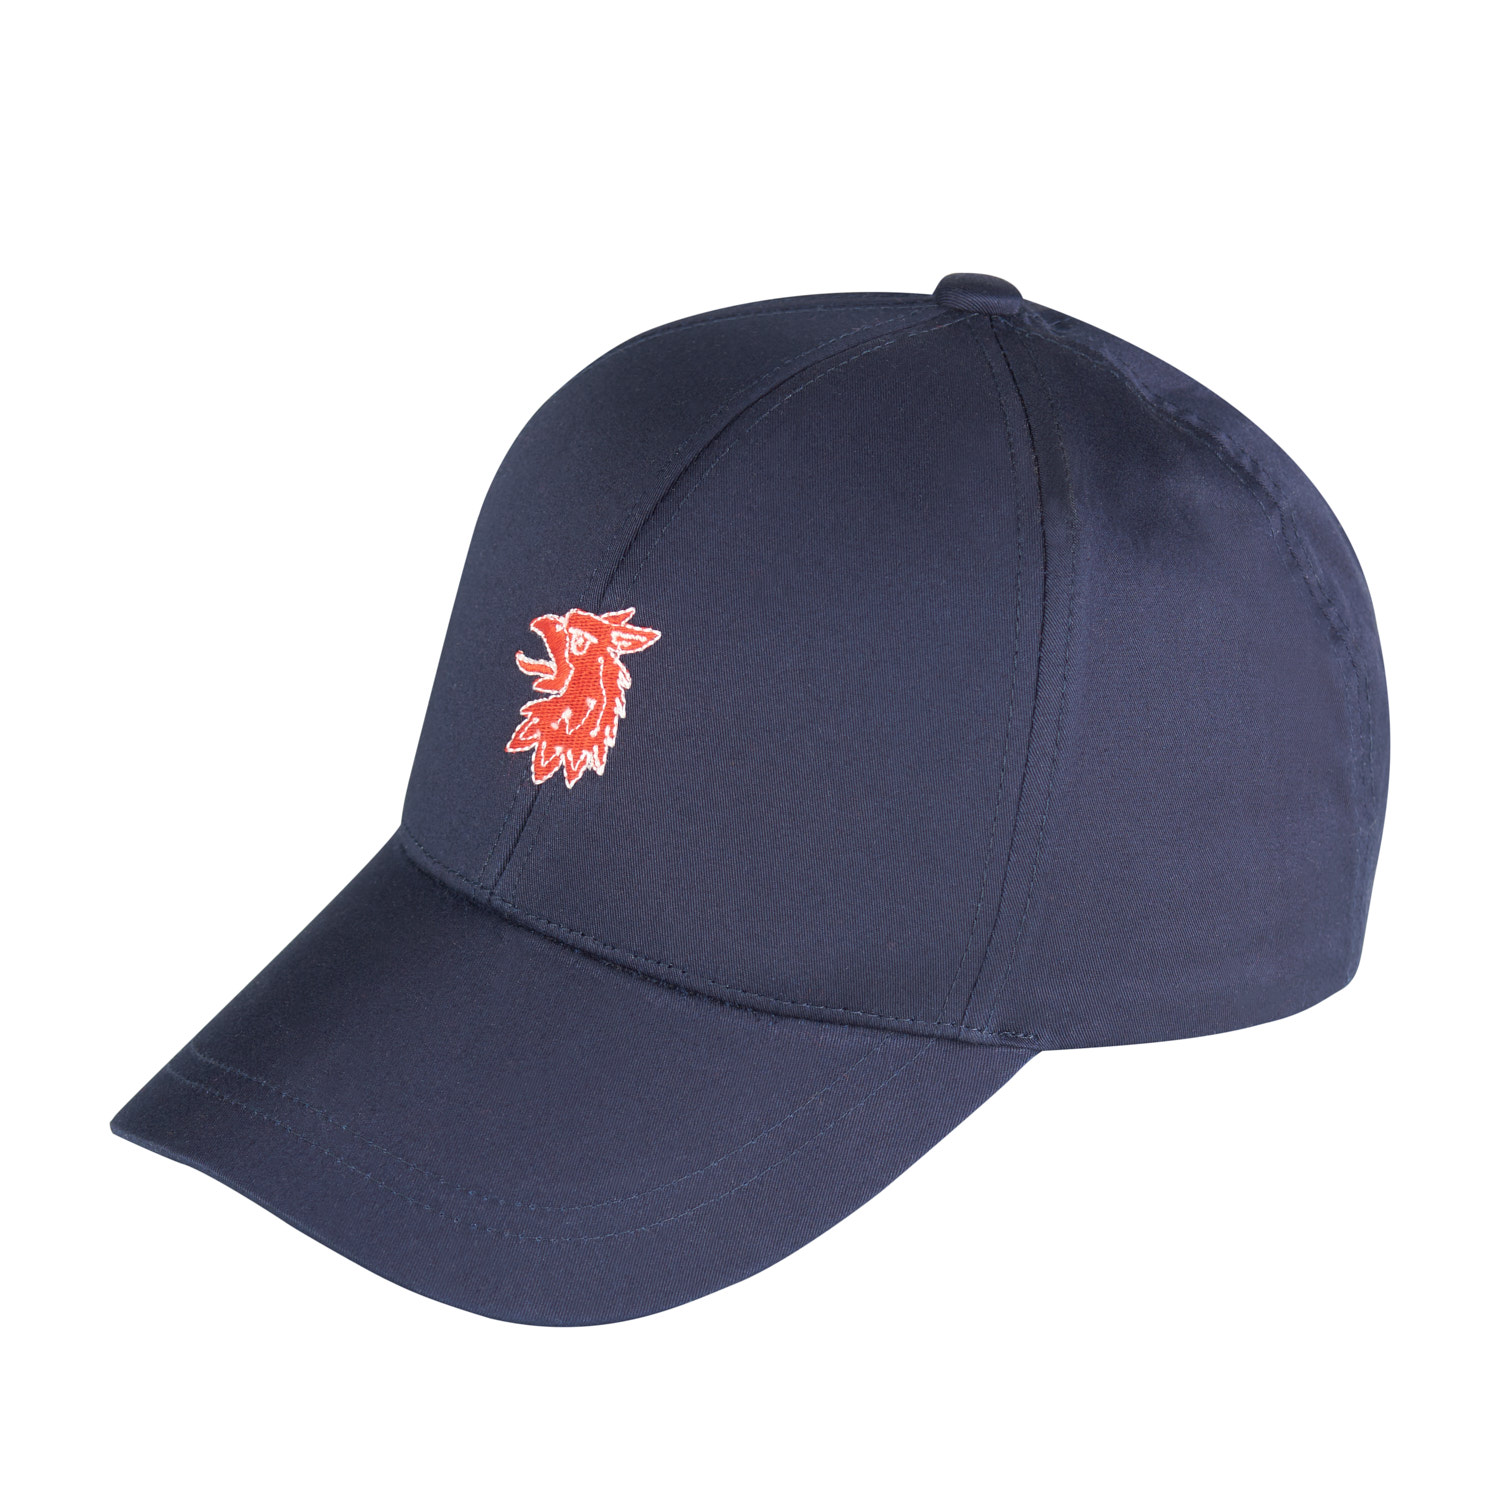 Baseball Cap Navy product image - front